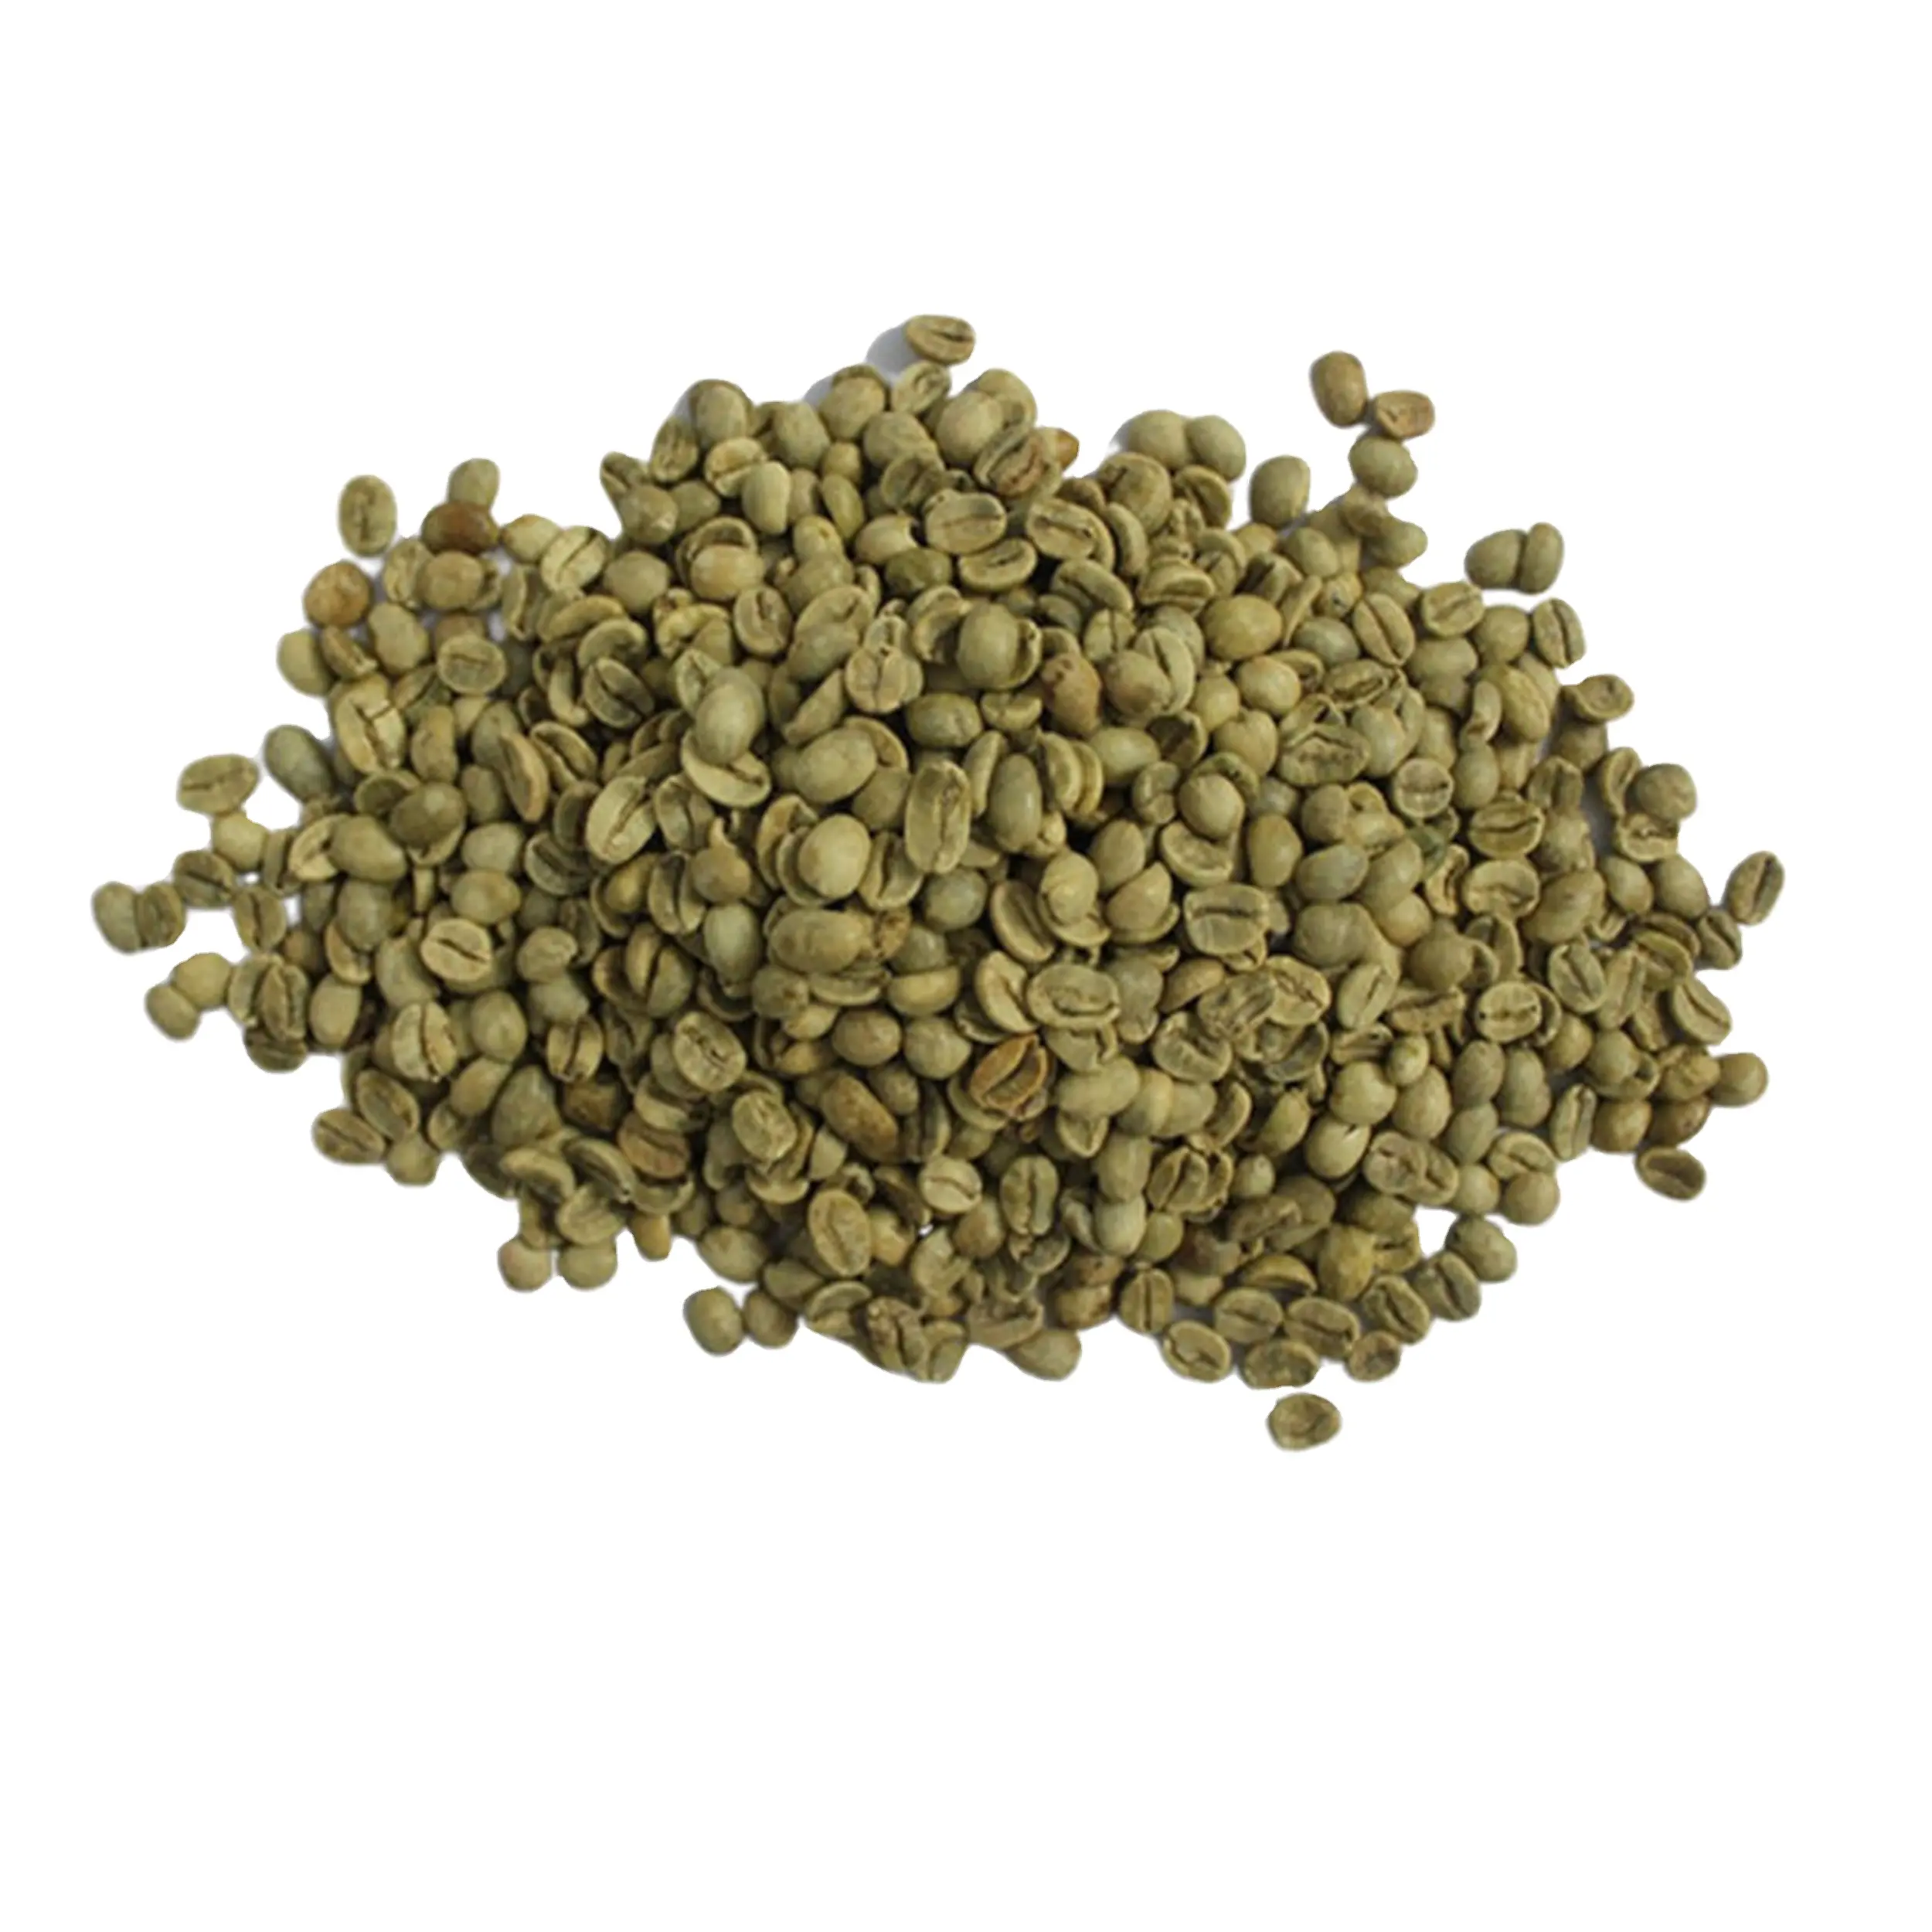 Top Quality Premium Grade Green Coffee Bean Vietnam Original Best Price 100% Natural Pure Green Coffee Bean Hot Selling